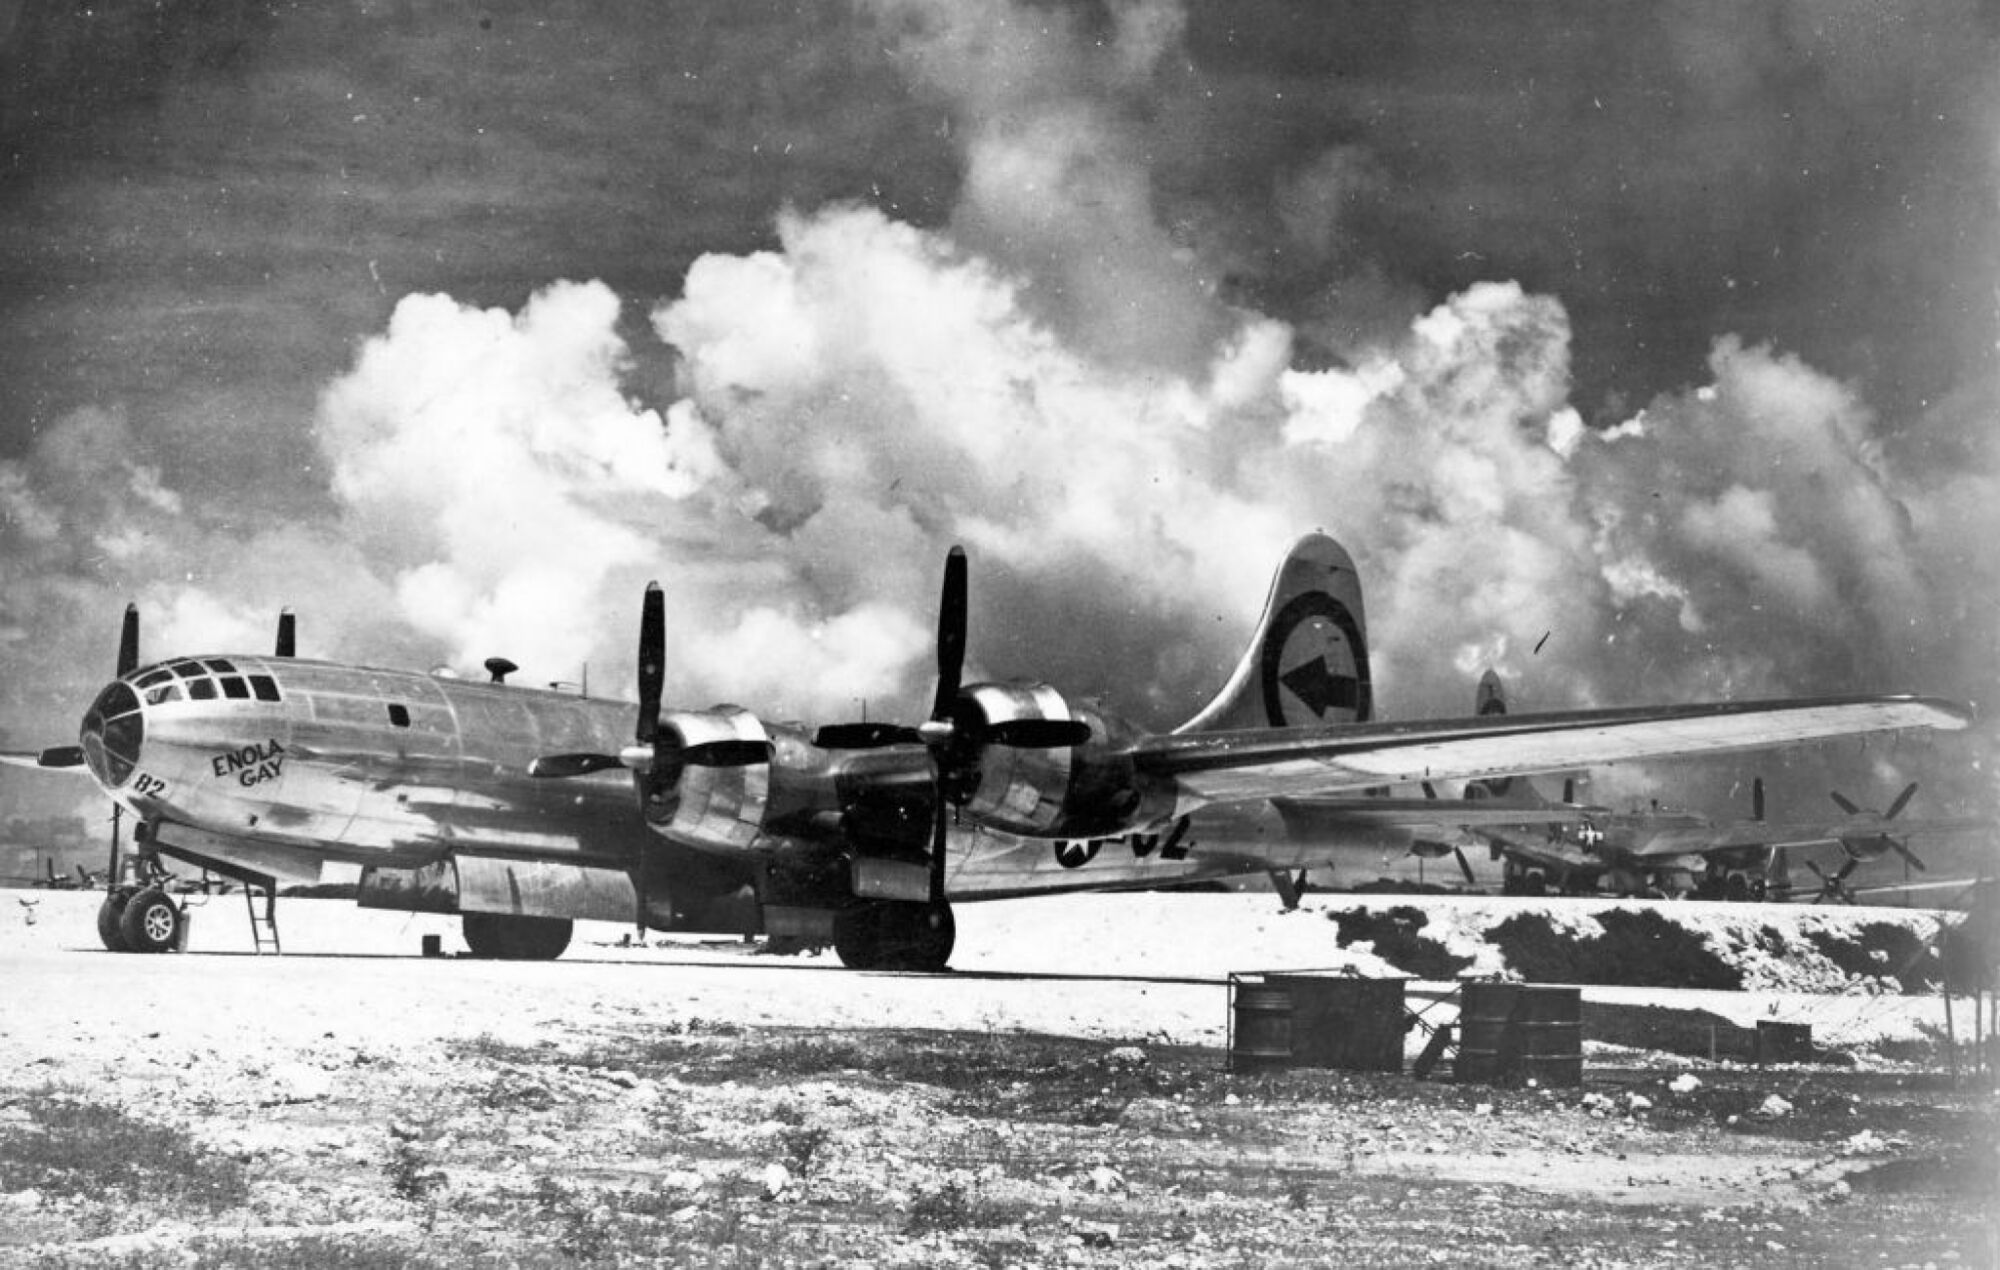 Enola Gay, the B-29 bomber that dropped an atomic bomb on Hiroshima, Japan.